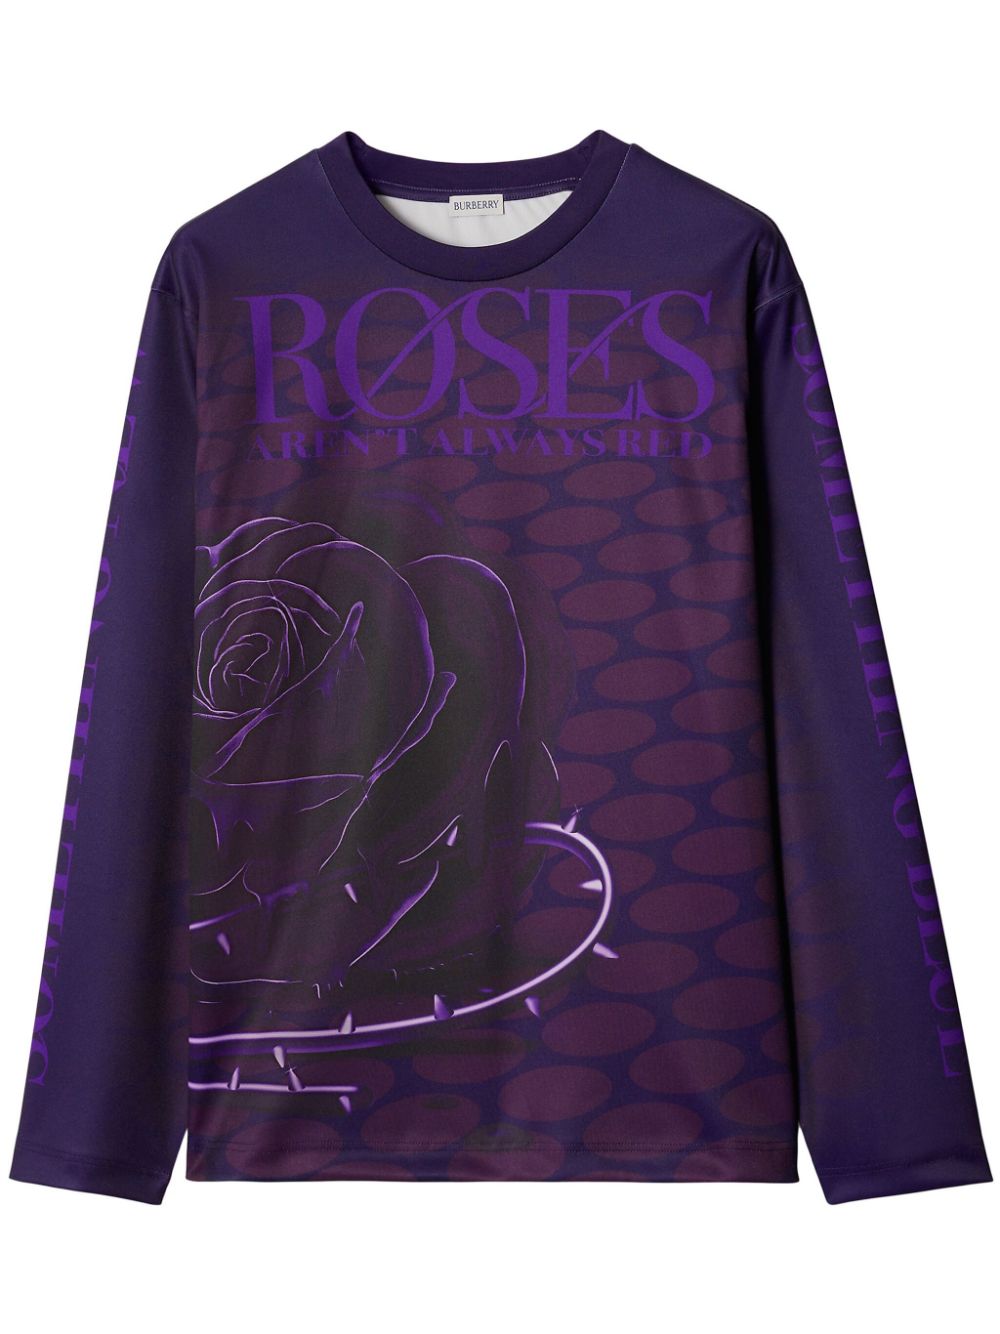 Burberry rose-print long-sleeve jumper - Purple